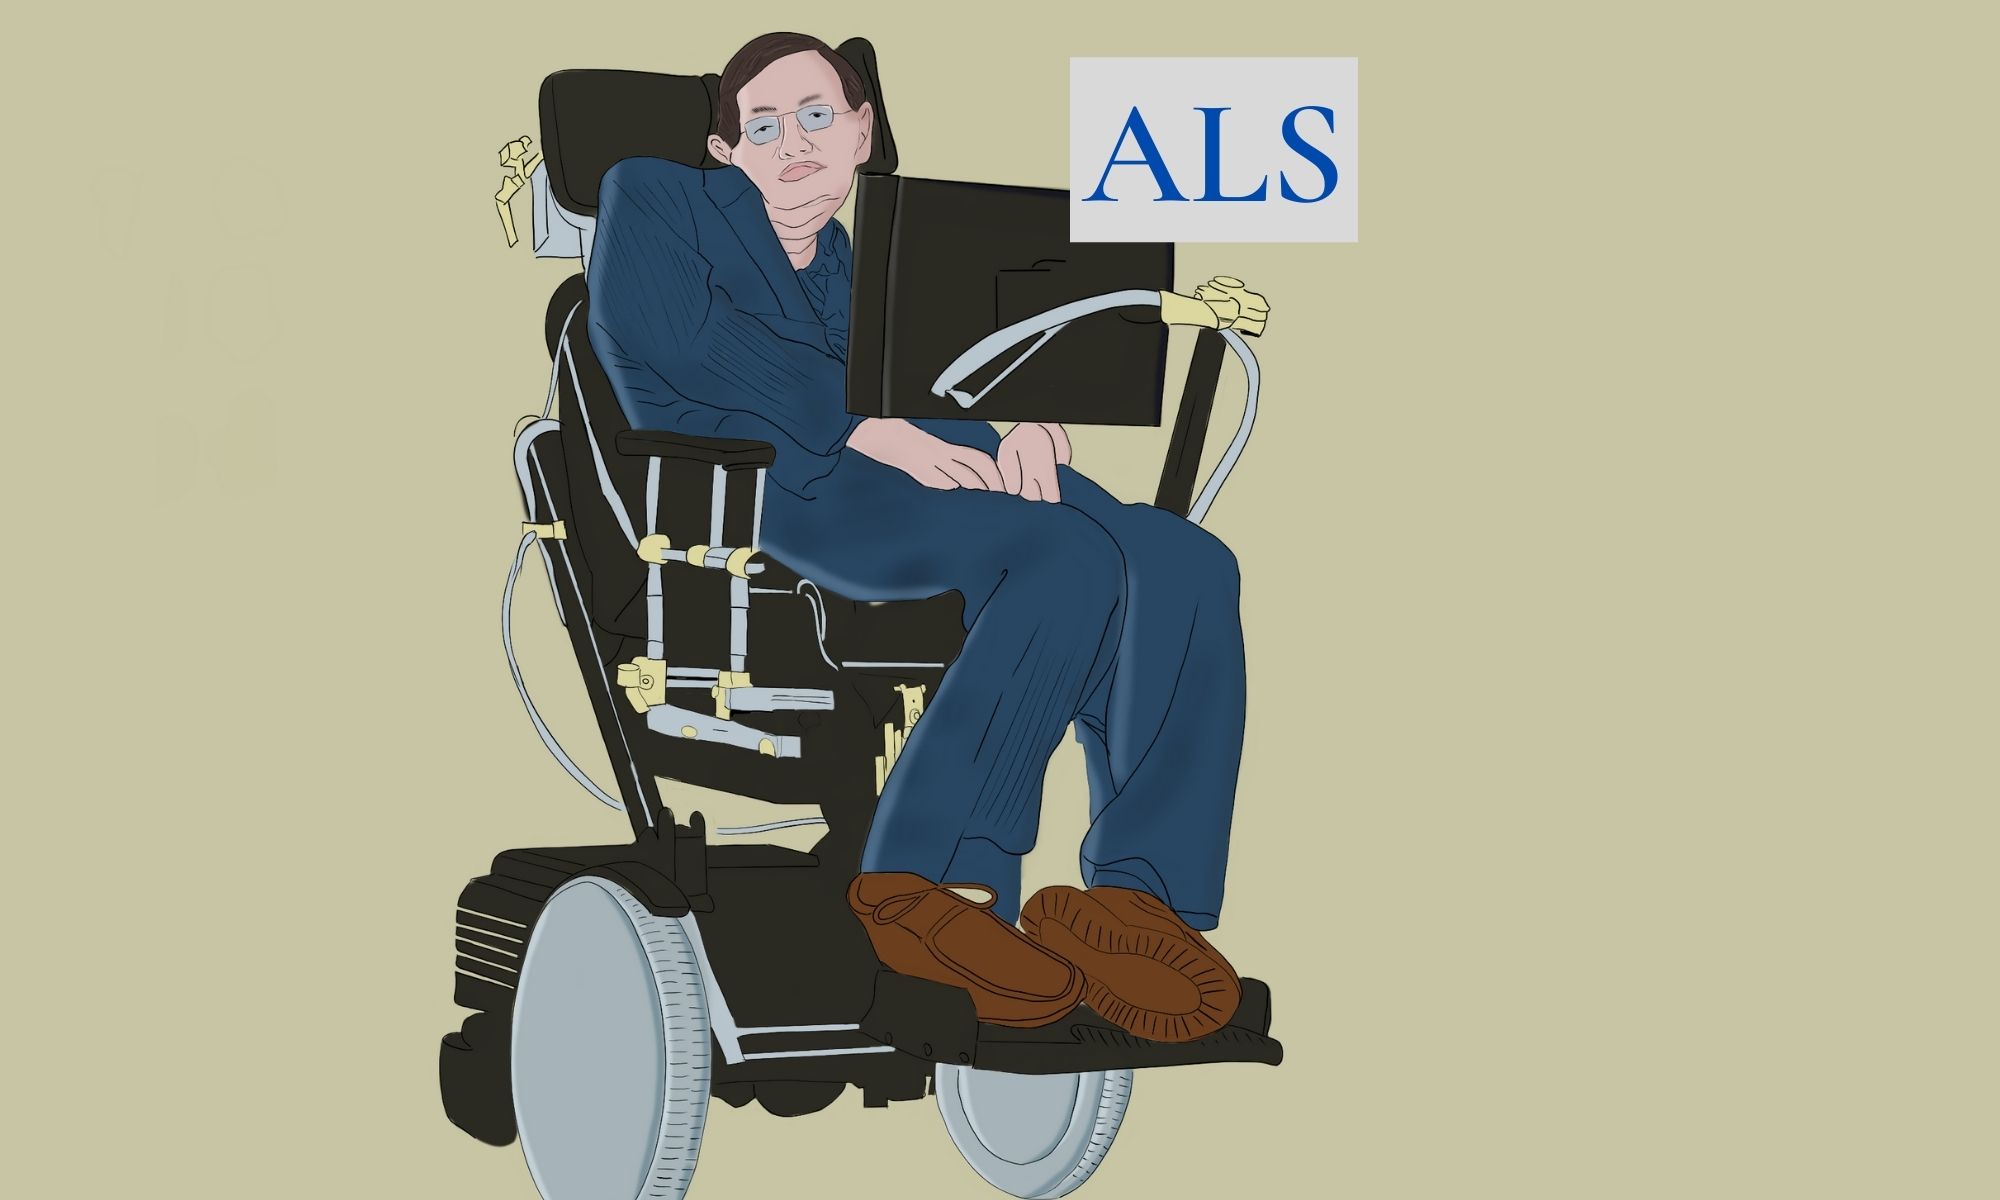 Stephen Hawking on his chair